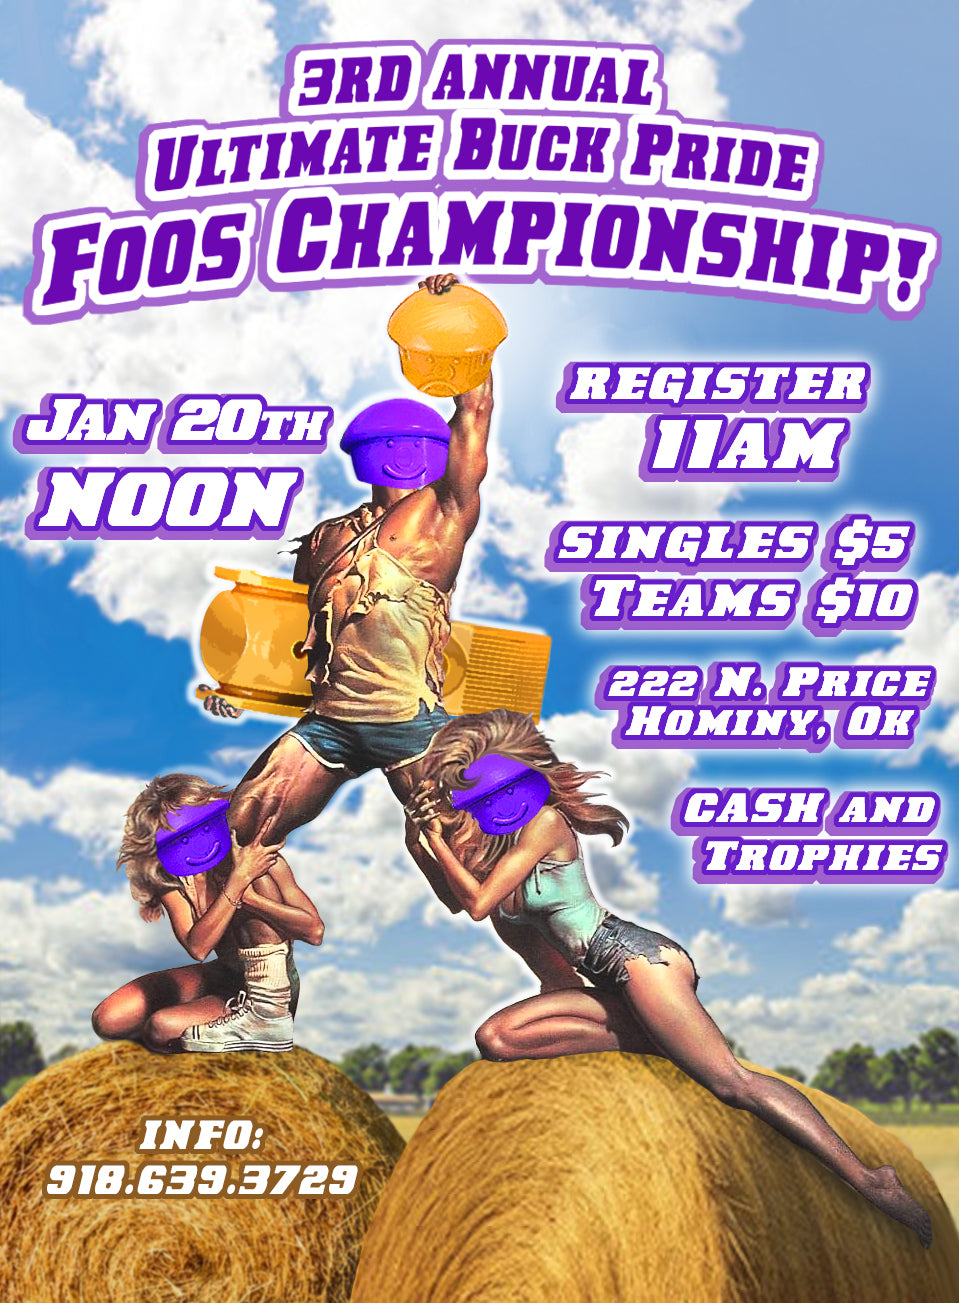 Pre Register for Ultimate Foos Championship.